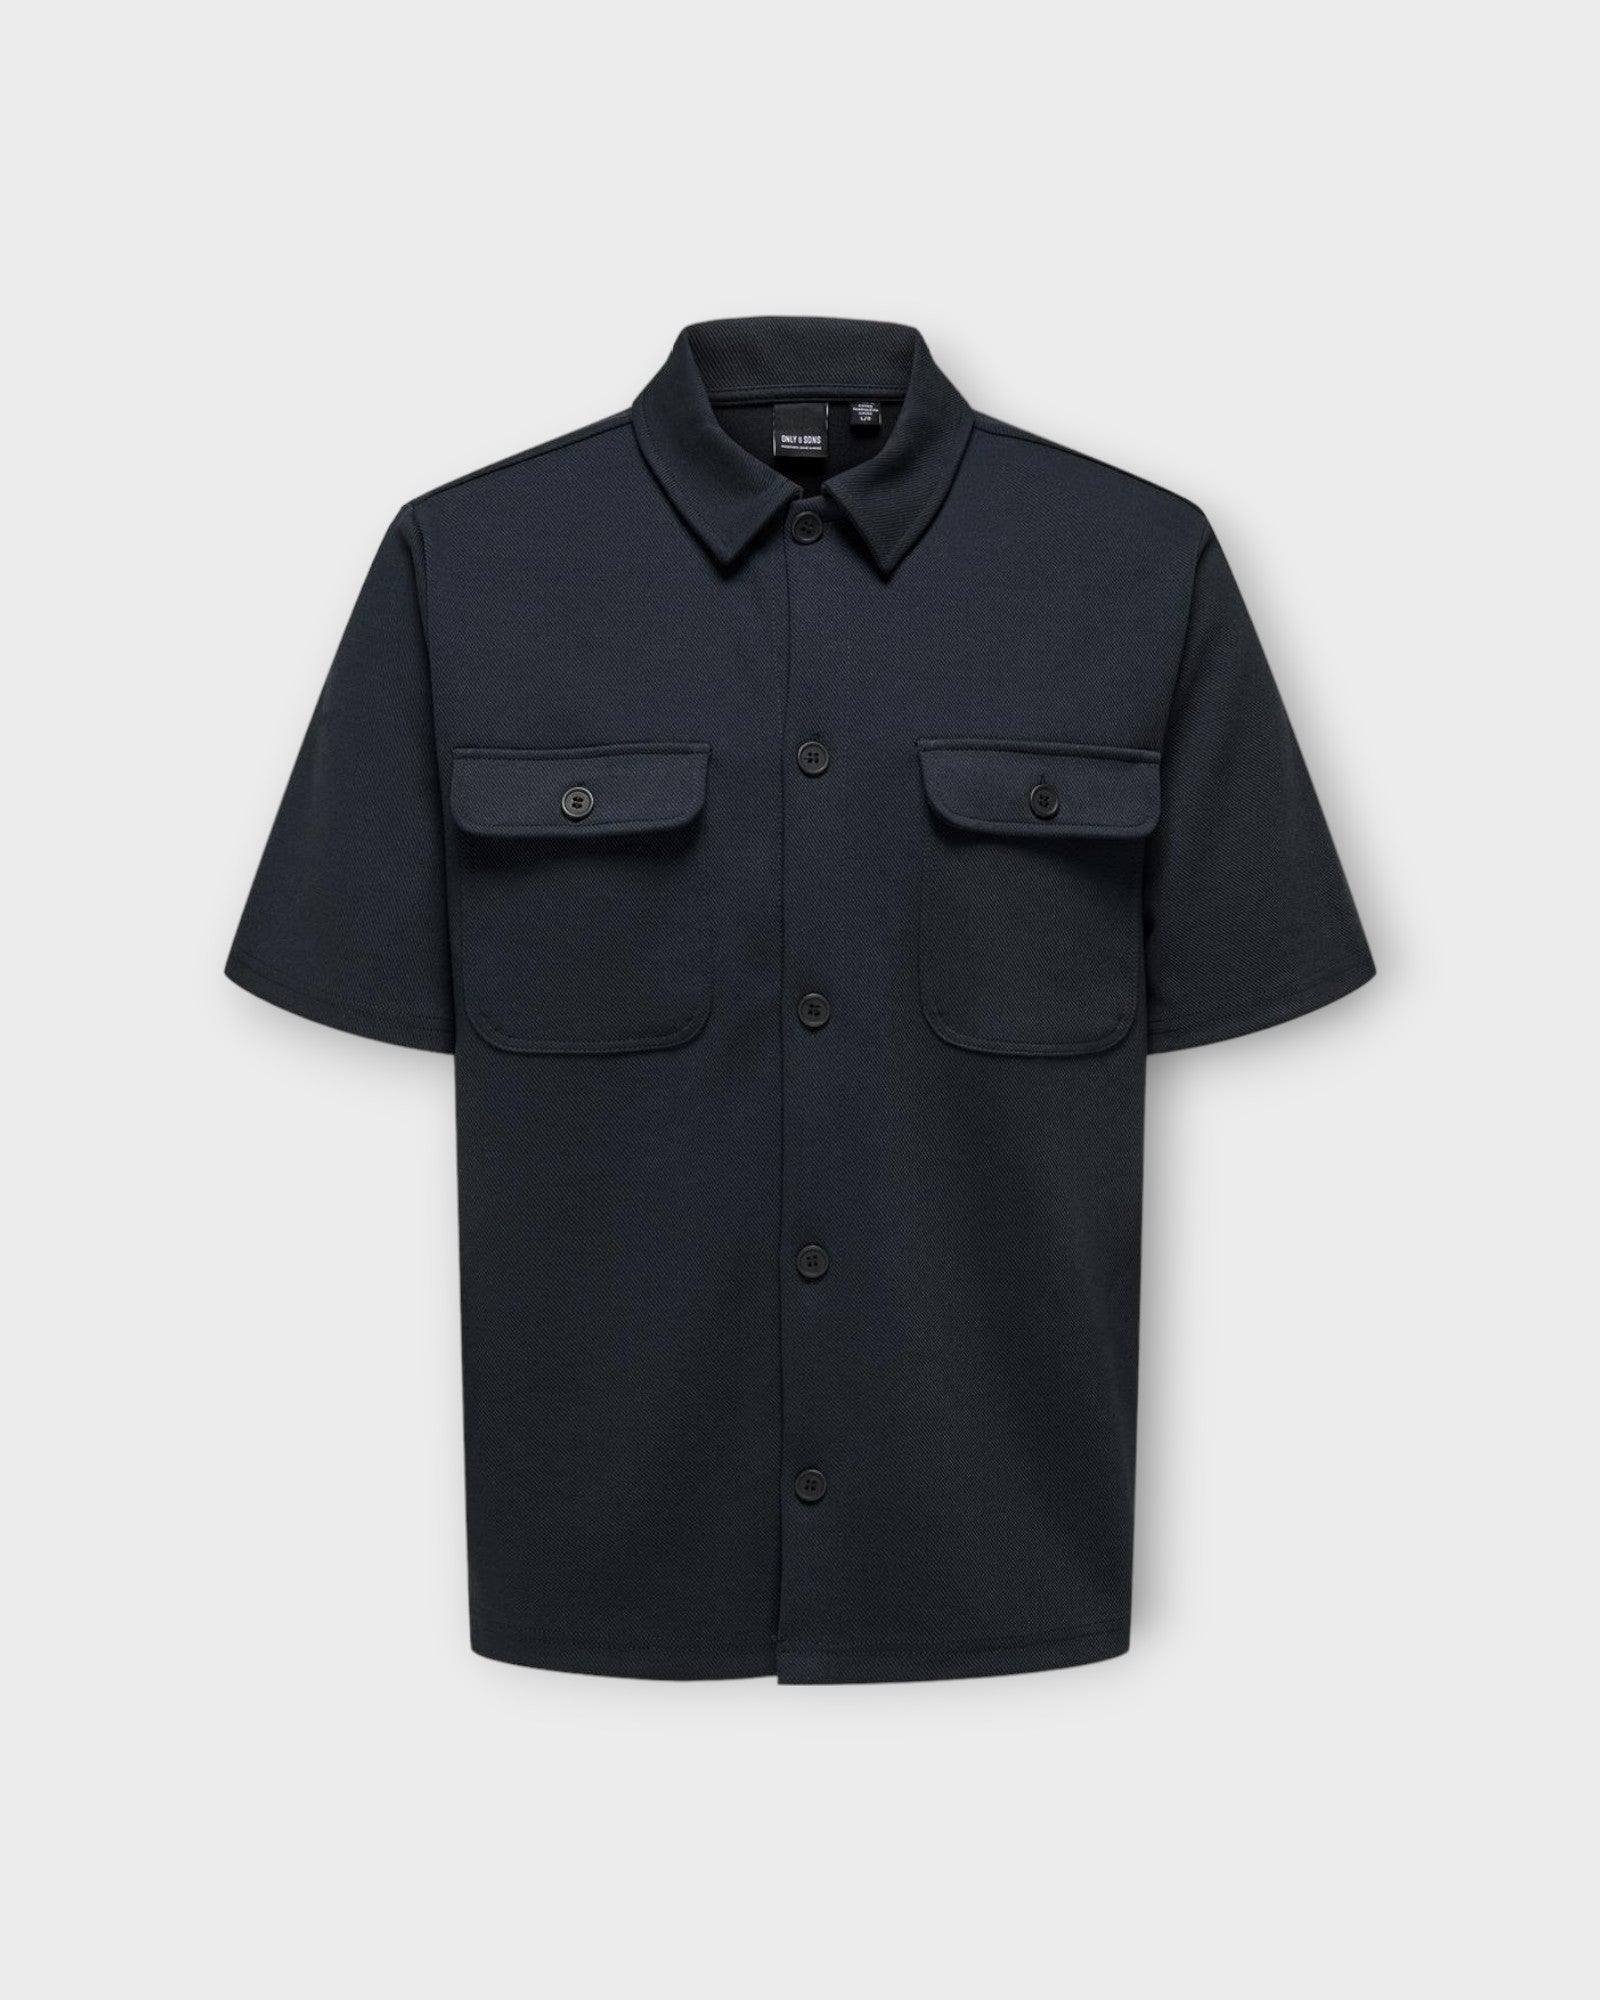 Kodyl SS Shirt Sweat Dark Navy fra Only and Sons. Kortærmet navy blå skjorte i sweat kvalitet. Her set forfra.